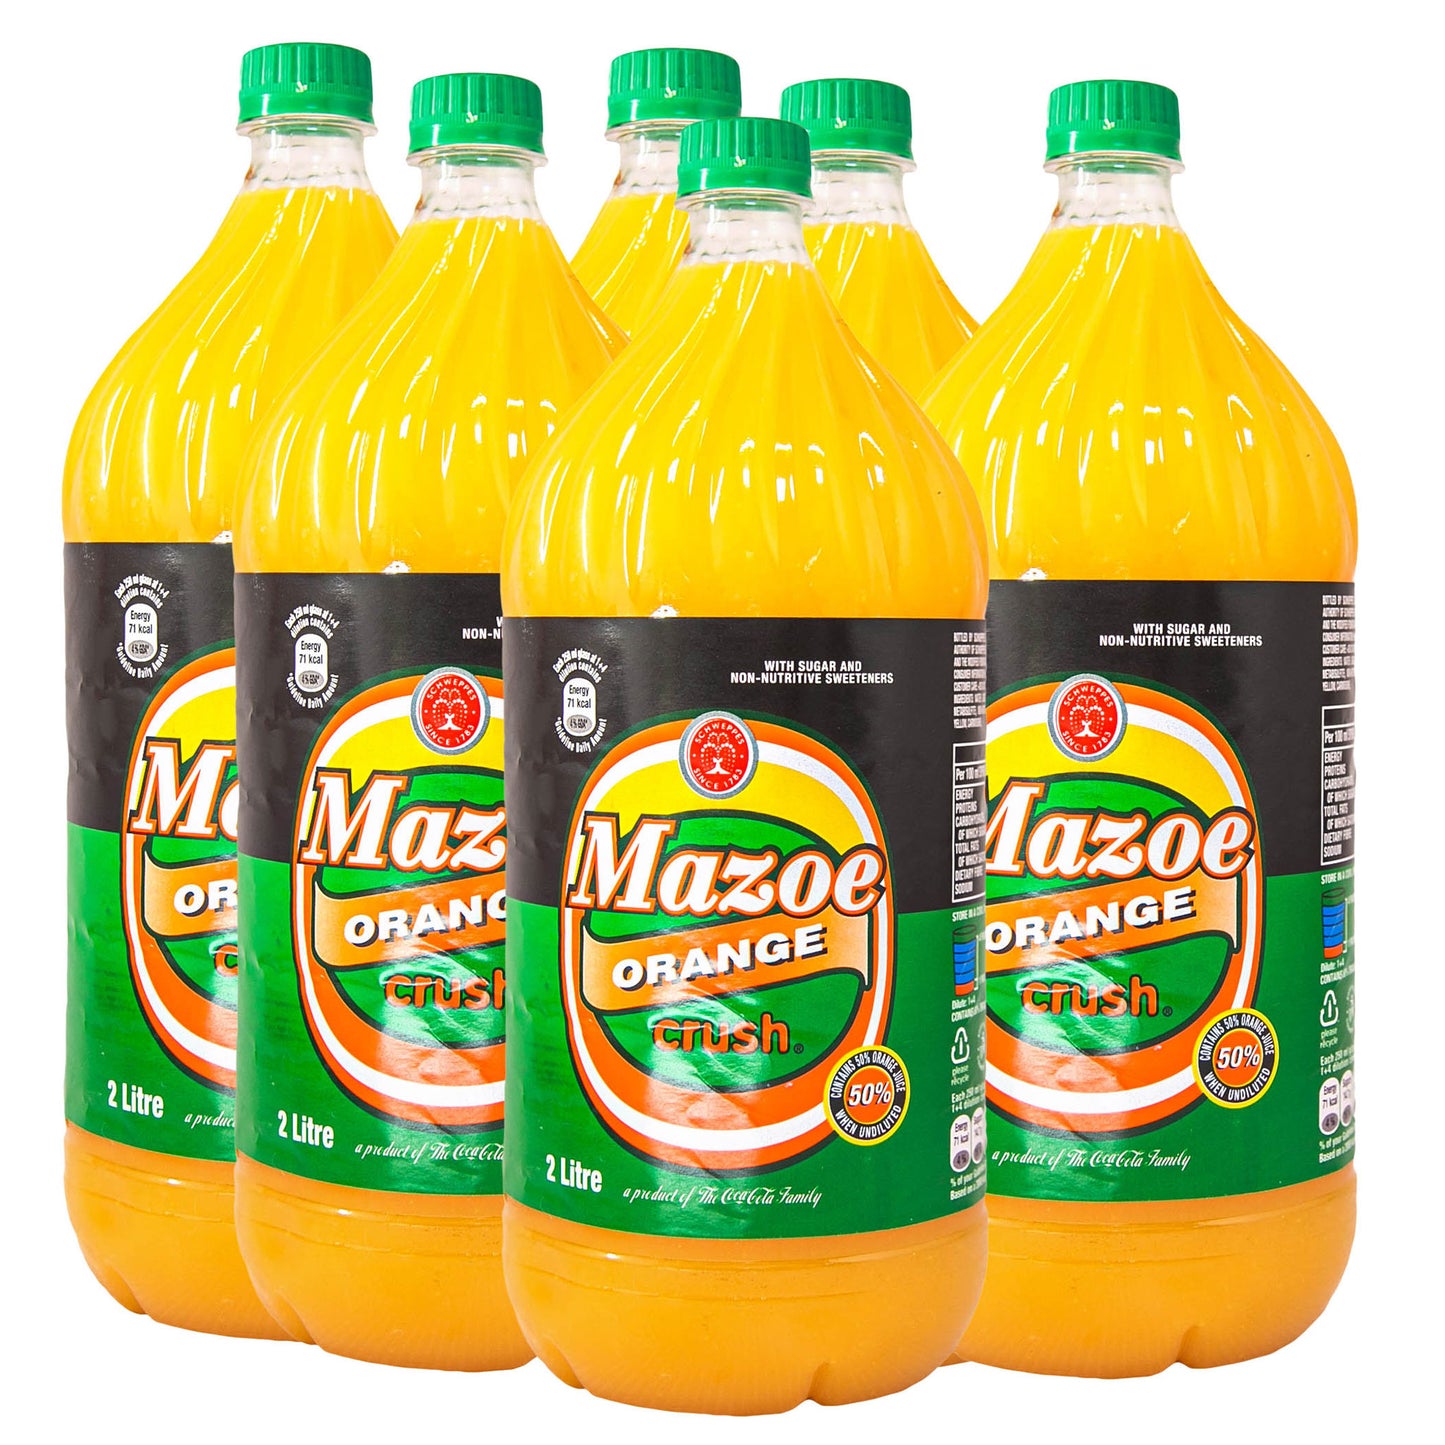 Mazoe Orange Crush - 6 x 2L